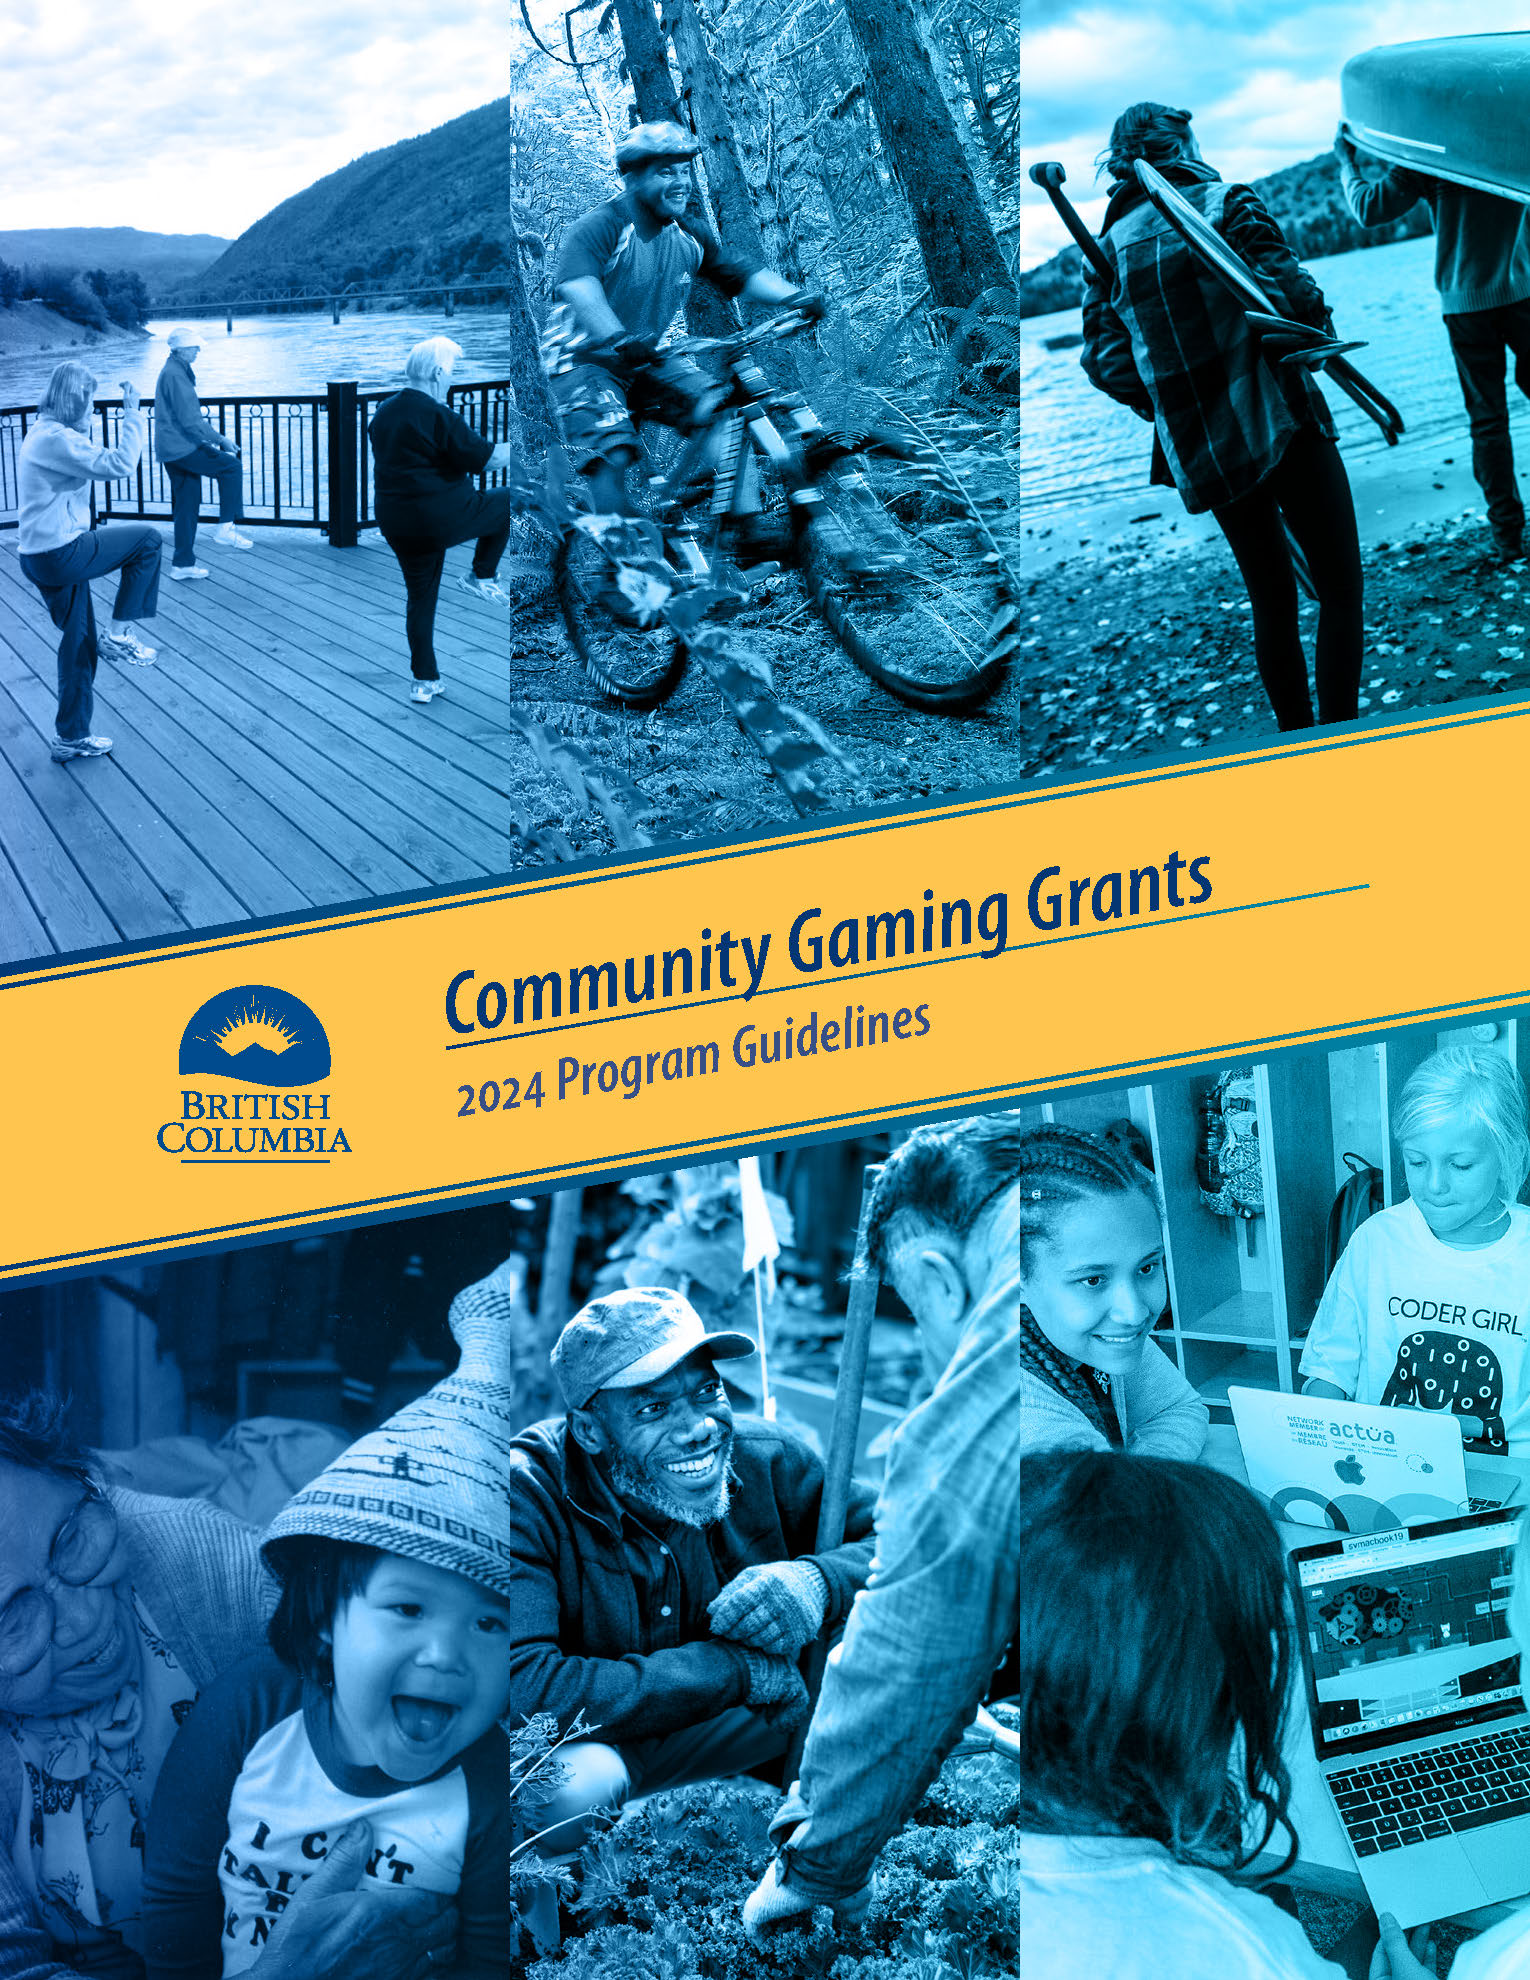 Community Gaming Grants: 2024 Program Guidelines